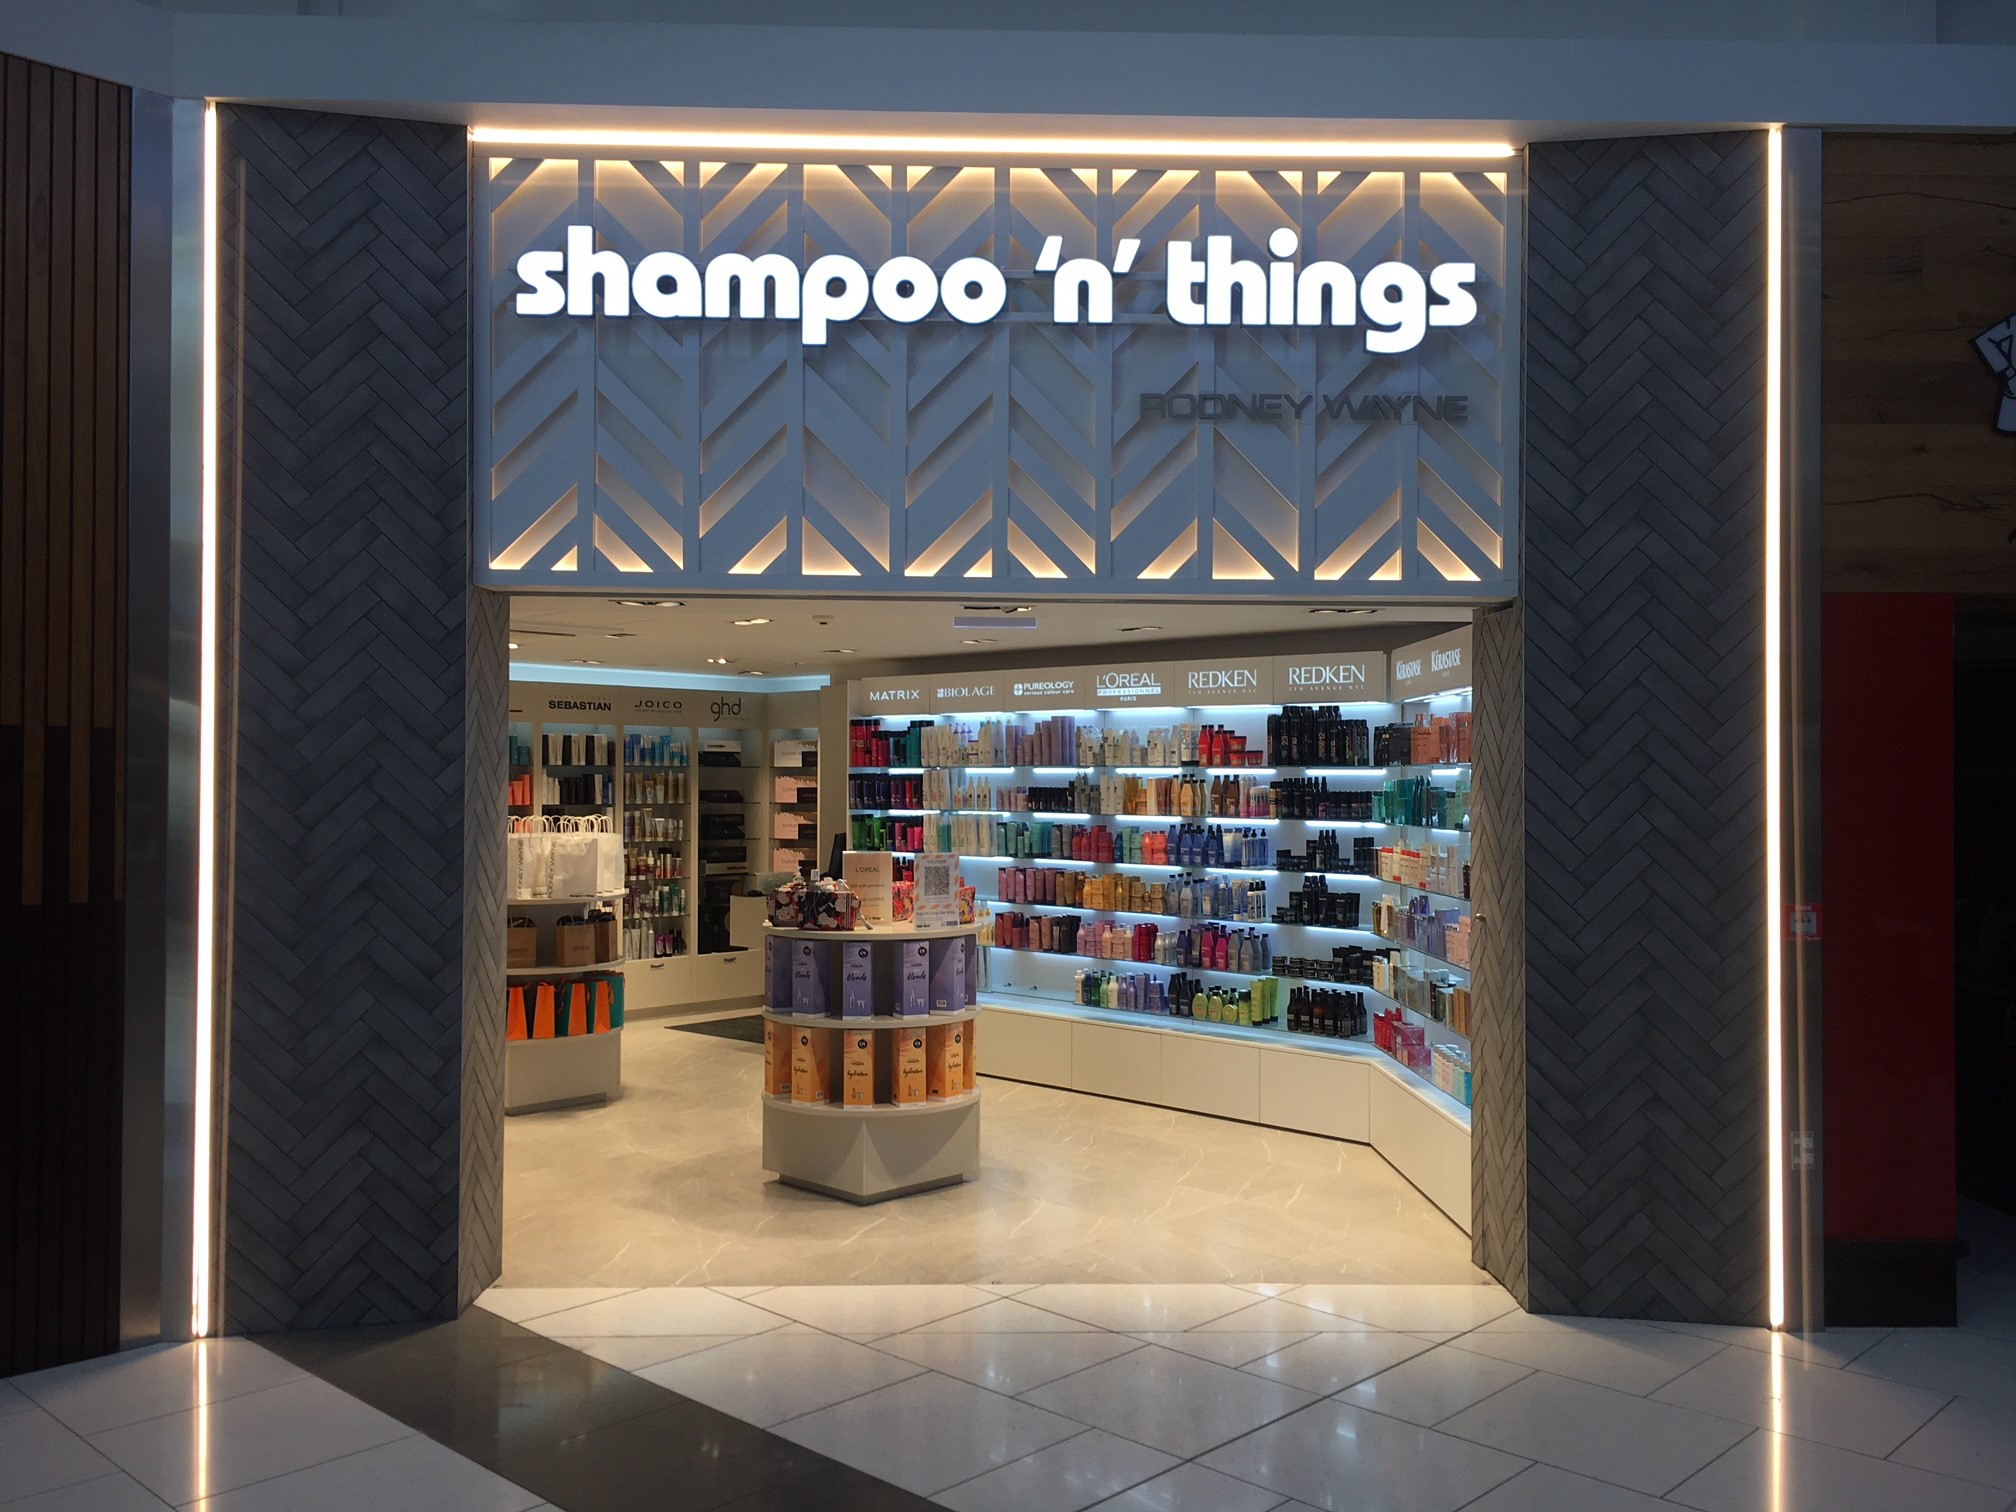 Shampoo 'n' Things Merrivale